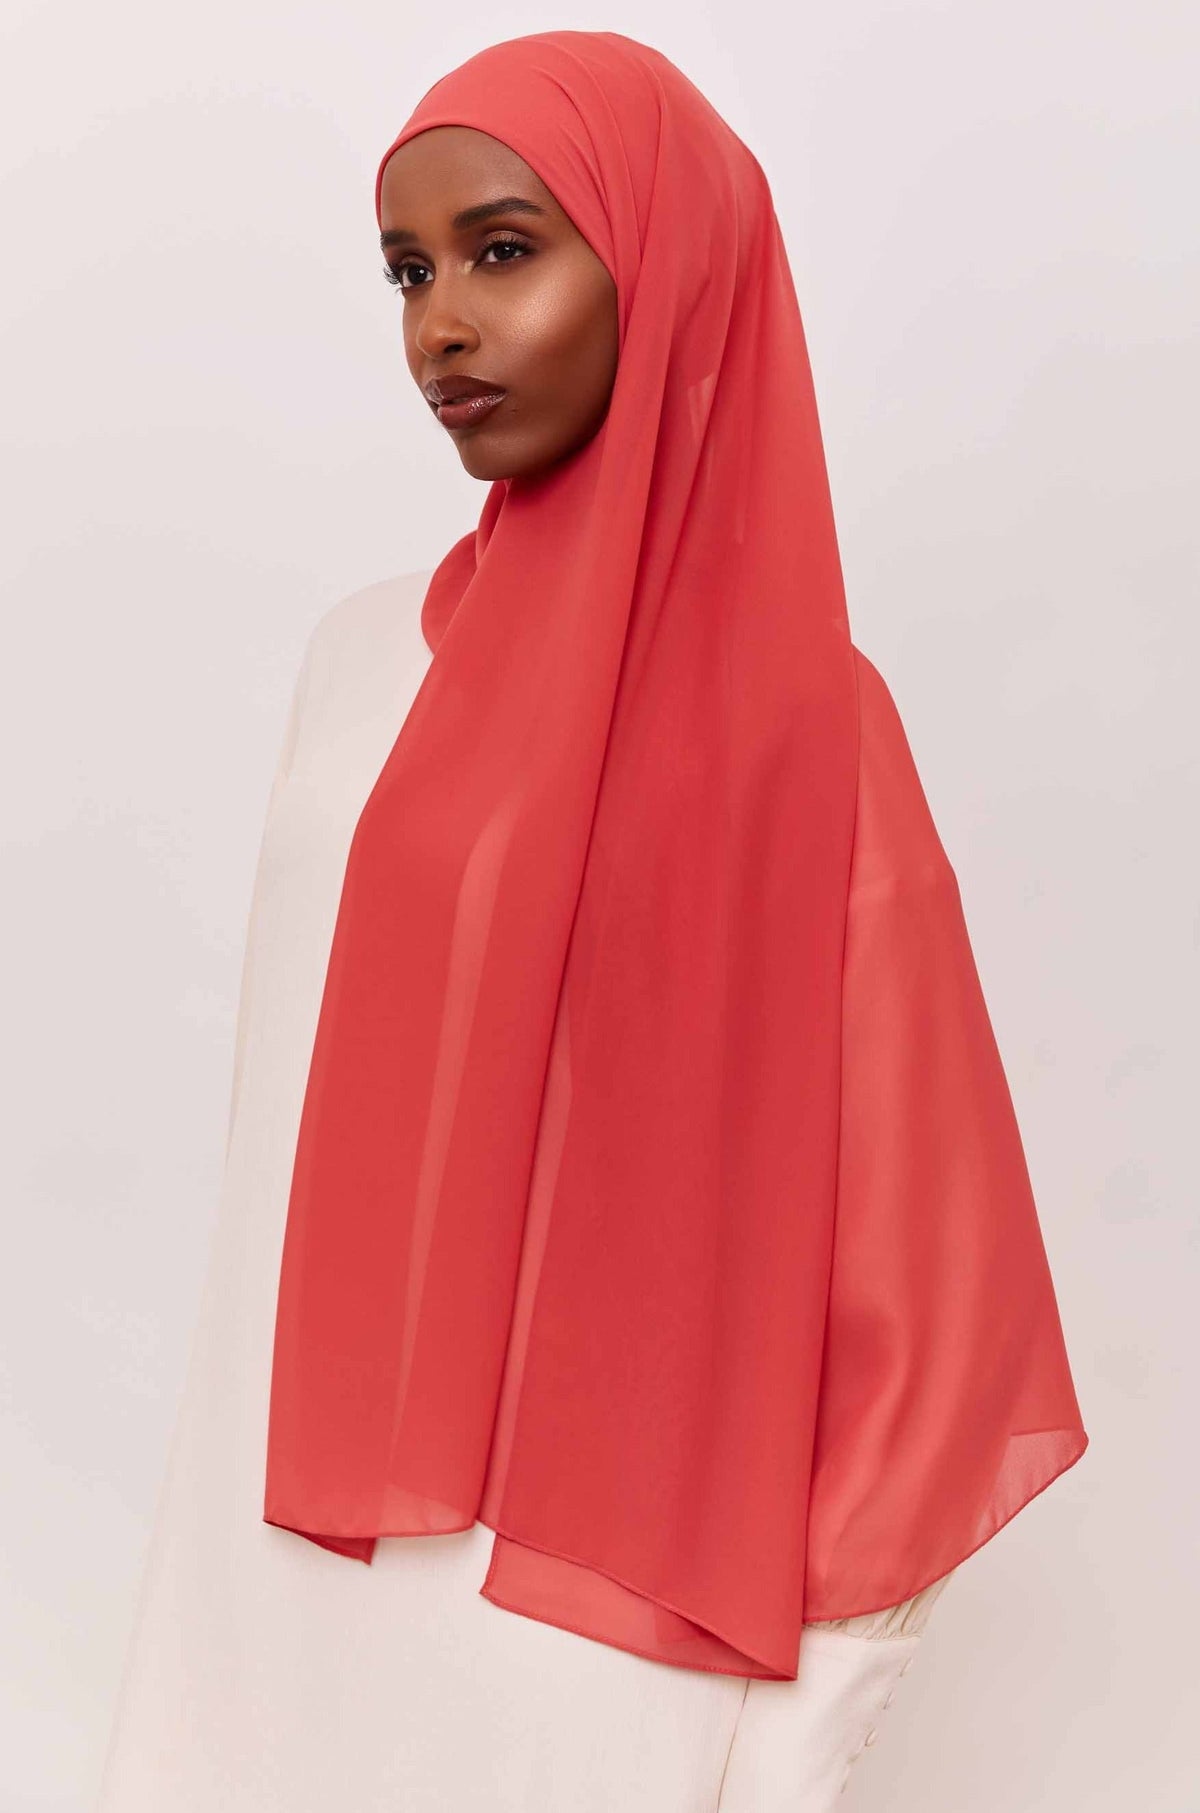 Chiffon LITE Hijab - Garnet Rose Accessories epschoolboard 